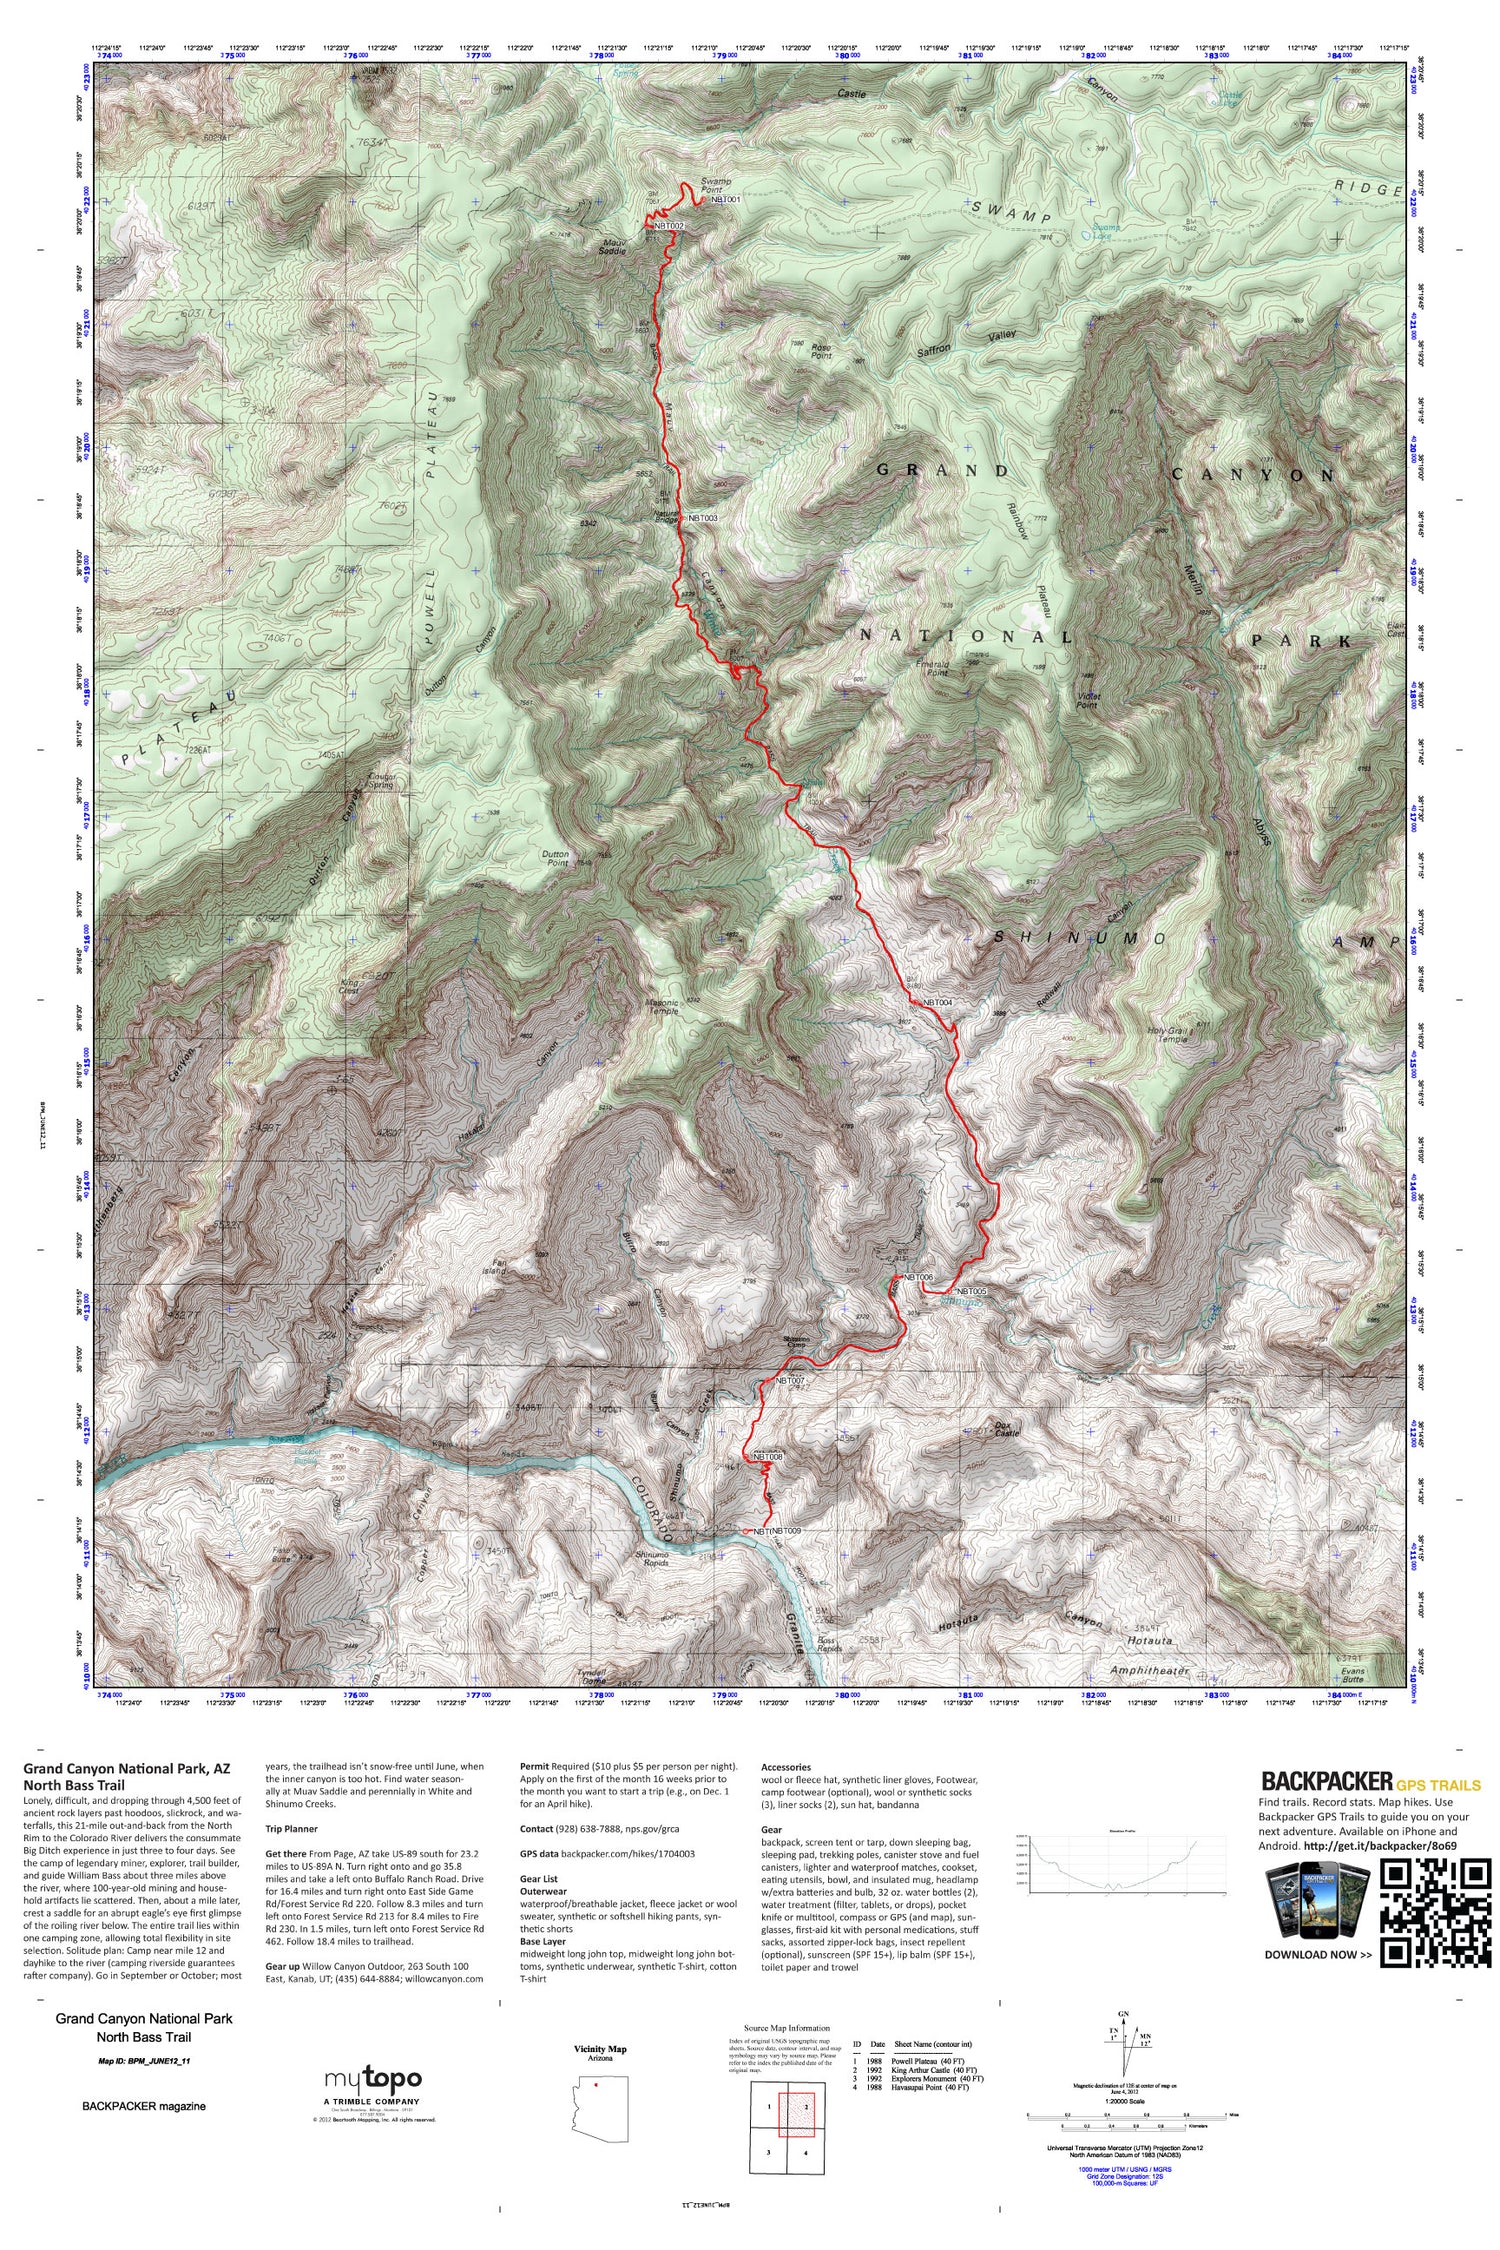 North Bass Trail Map (Grand Canyon NP, Arizona) Image